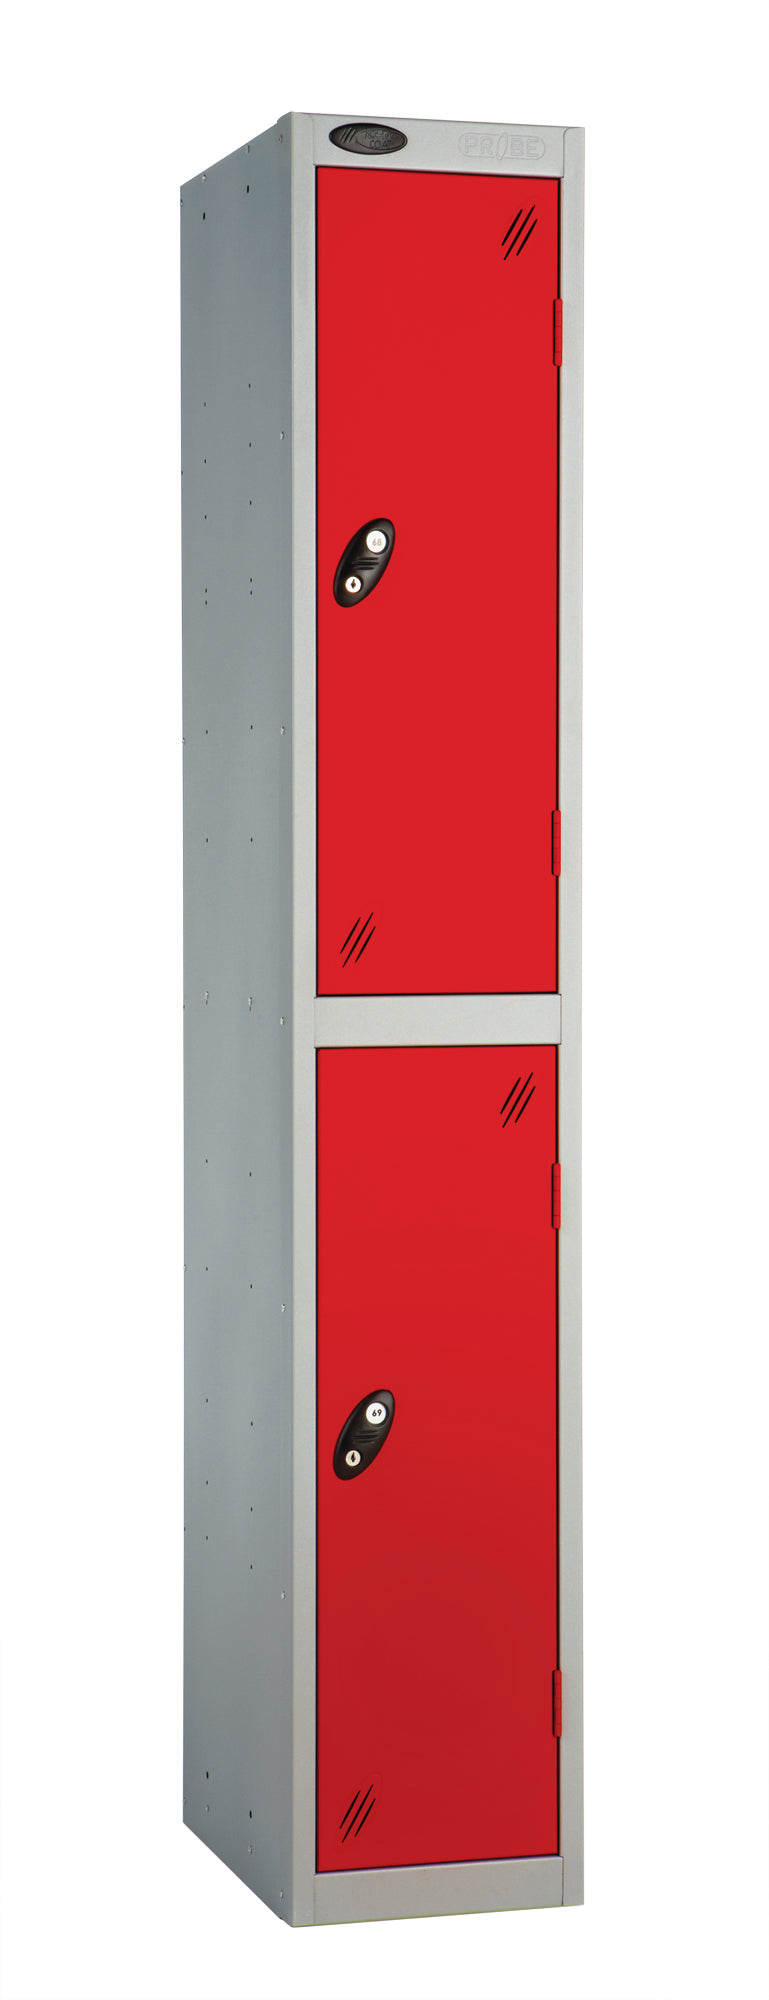 PROBEBOX STANDARD 1 NEST STEEL LOCKERS - FLAME RED 2 DOOR Storage Lockers > Lockers > Cabinets > Storage > Probe > One Stop For Safety   